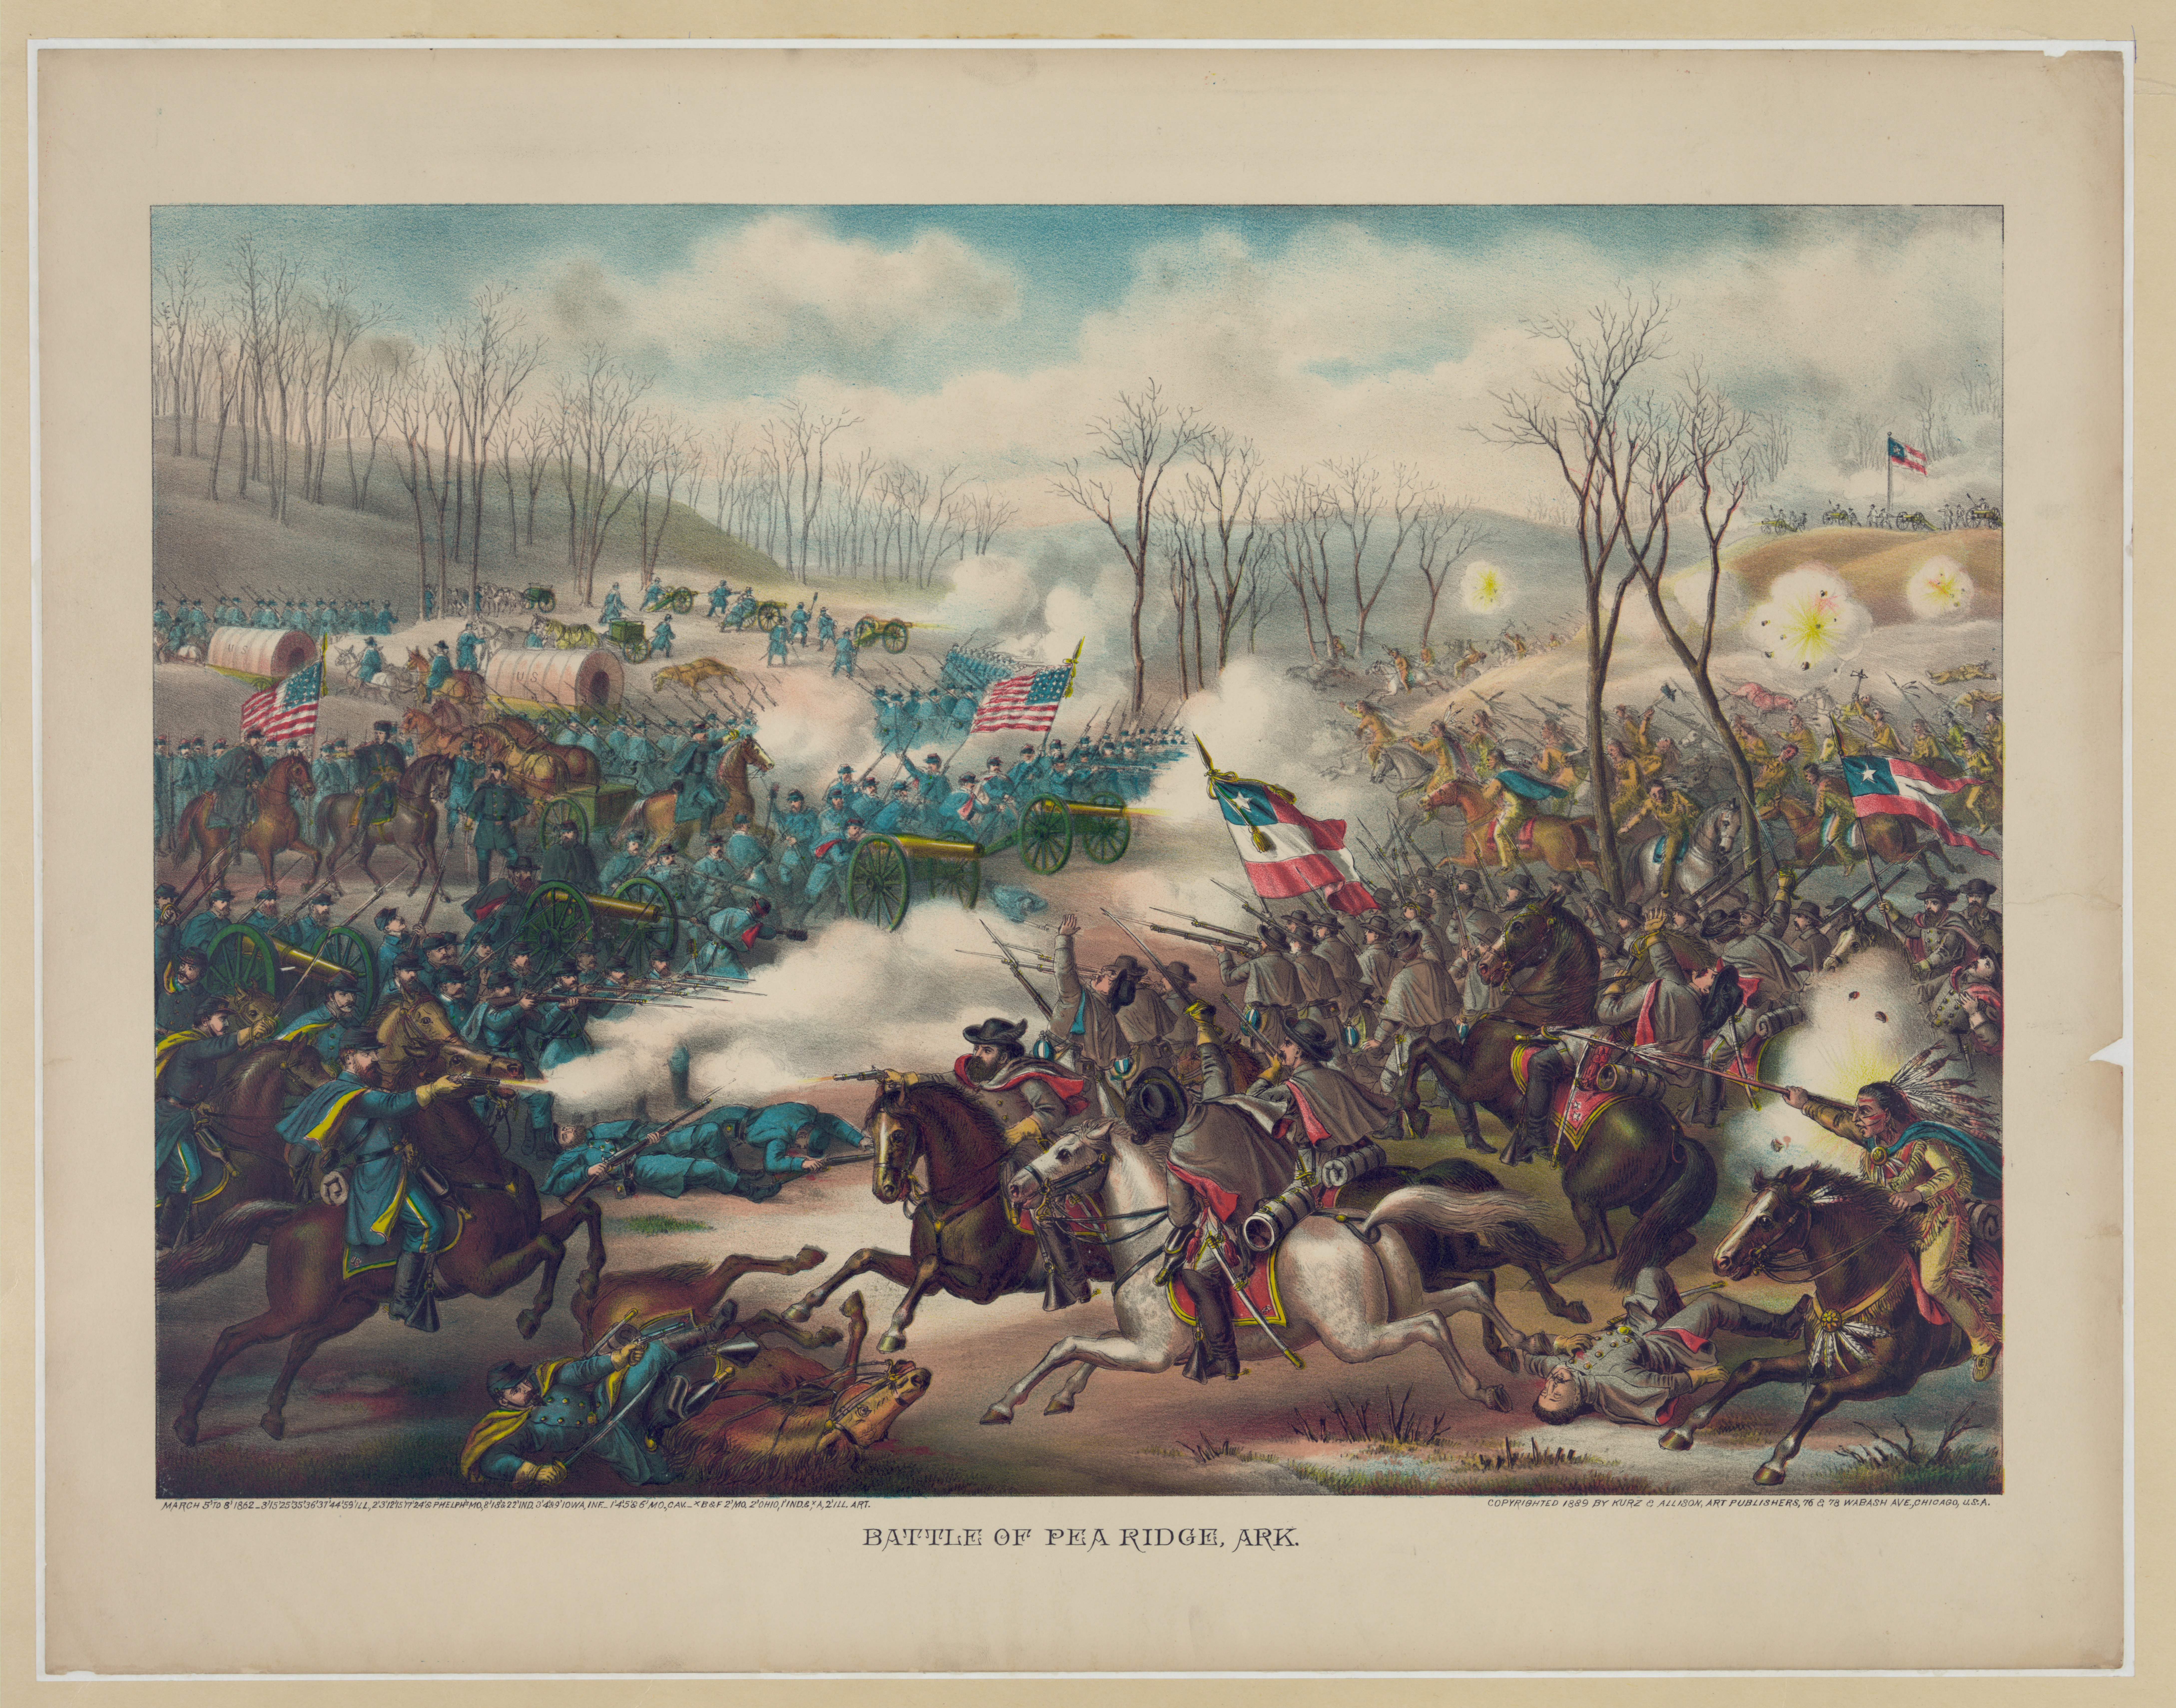 Battle of Pea Ridge, Ark. Kurz and Allison, publishers. Published in 1889. Digitally posted at http://cdn.loc.gov/service/pnp/pga/01800/01888v.jpg